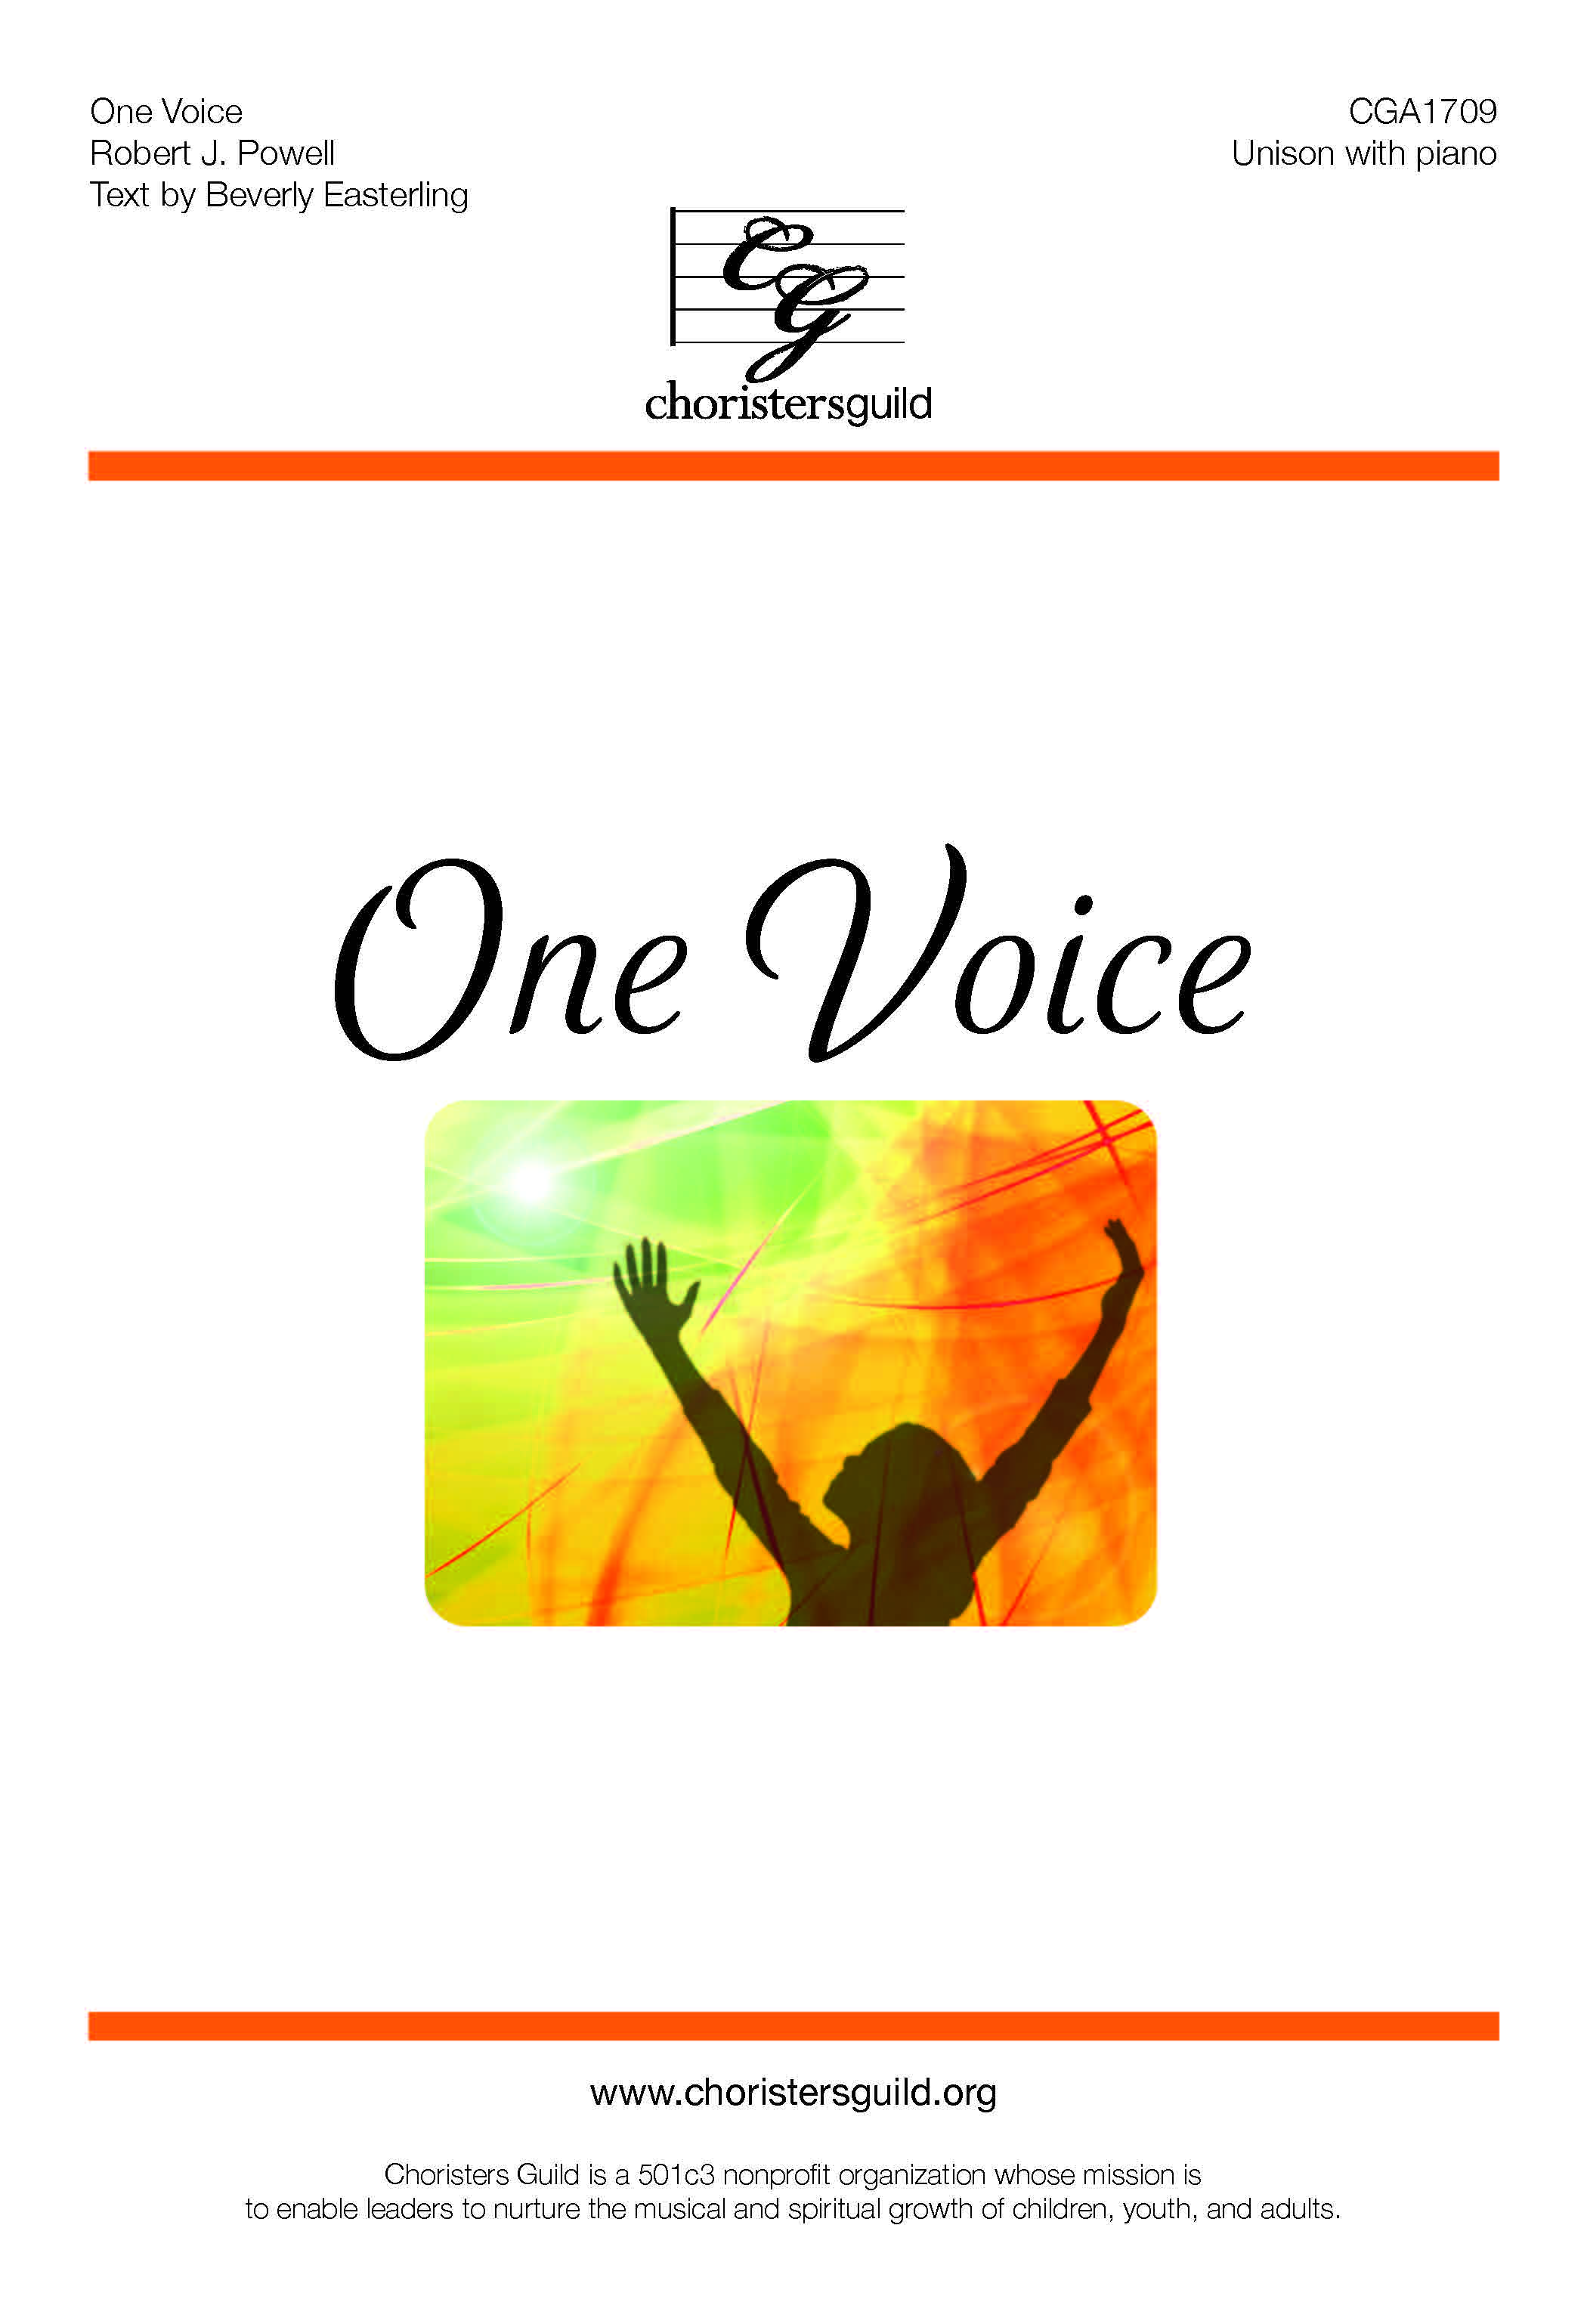 One Voice - Unison